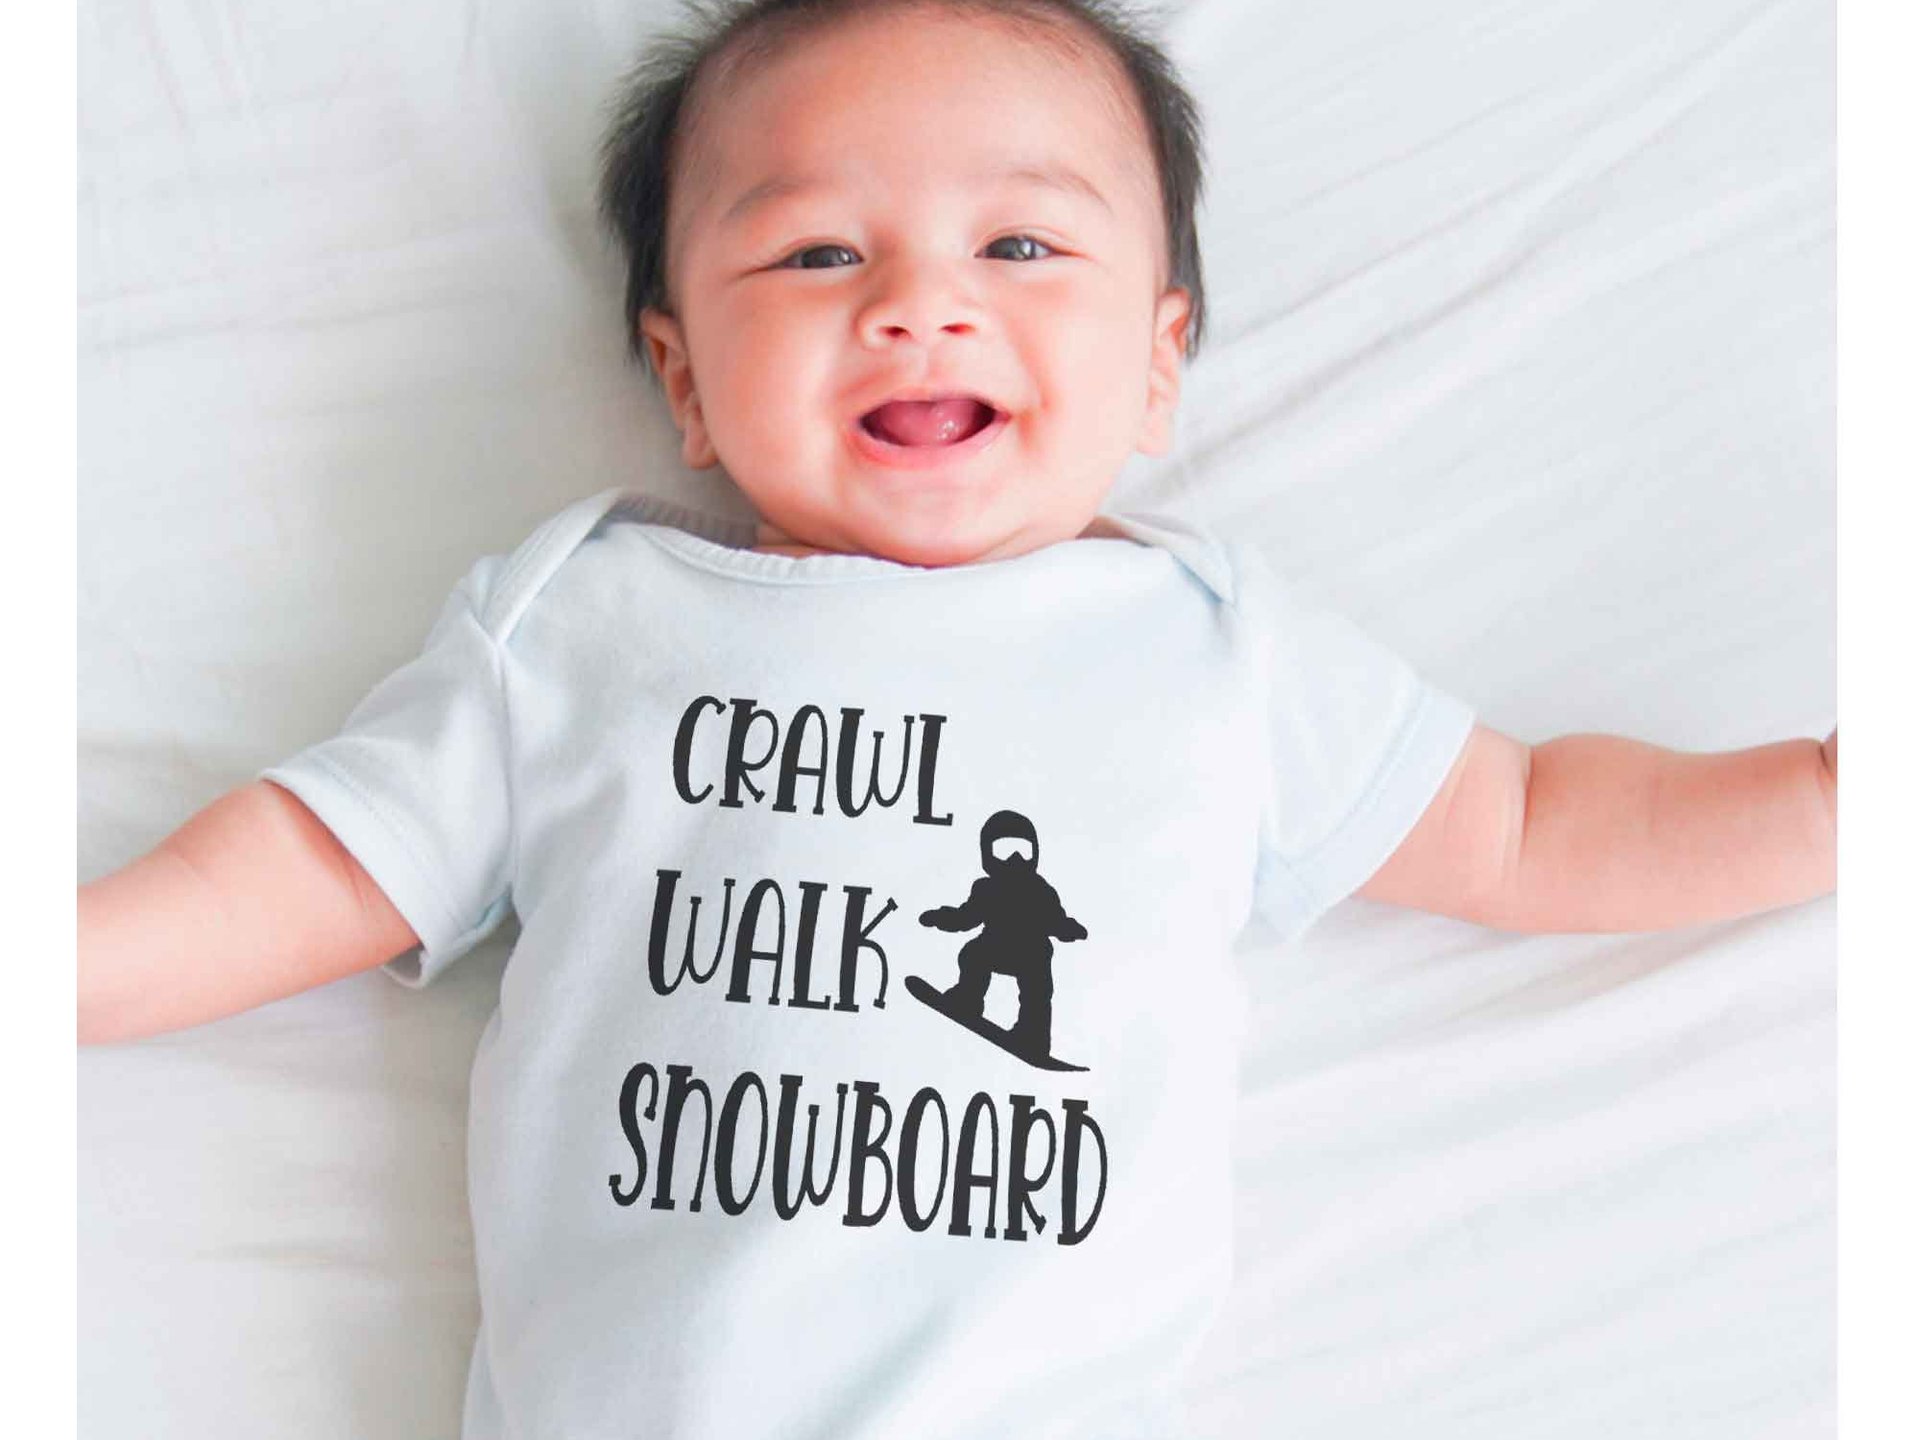 Crawl Walk Snowboard Baby Bodysuit, Winter Snow Sports Romper, Australian Kids Sizes Newborn to Toddler